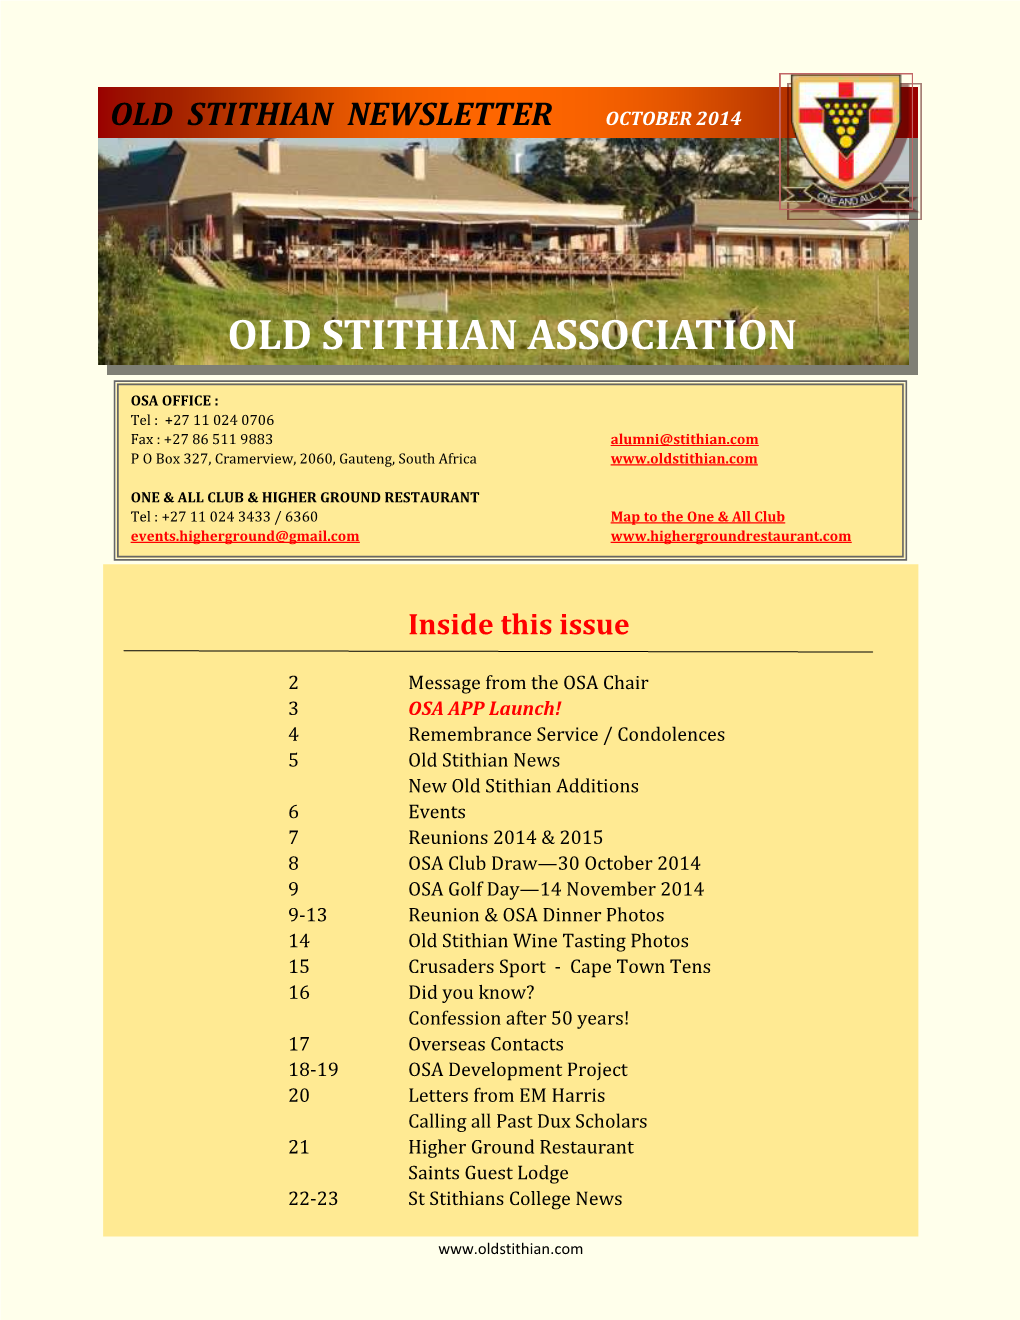 St Stithians College News